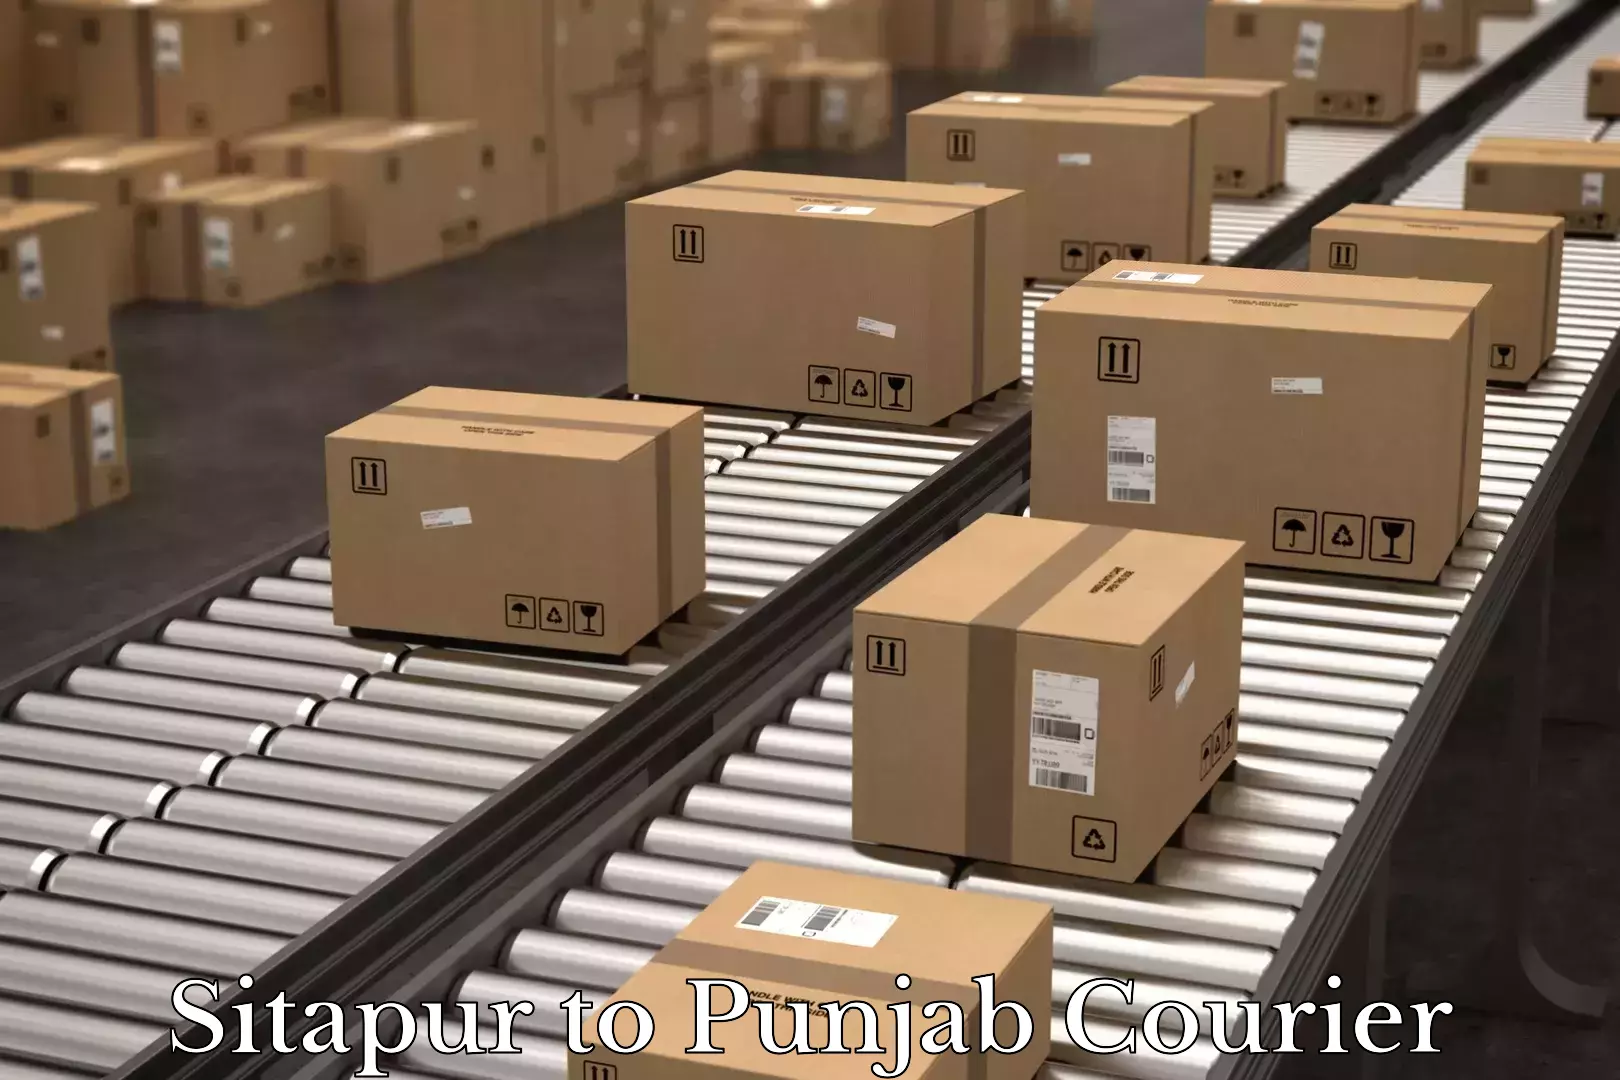 Luggage shipment strategy Sitapur to Punjab